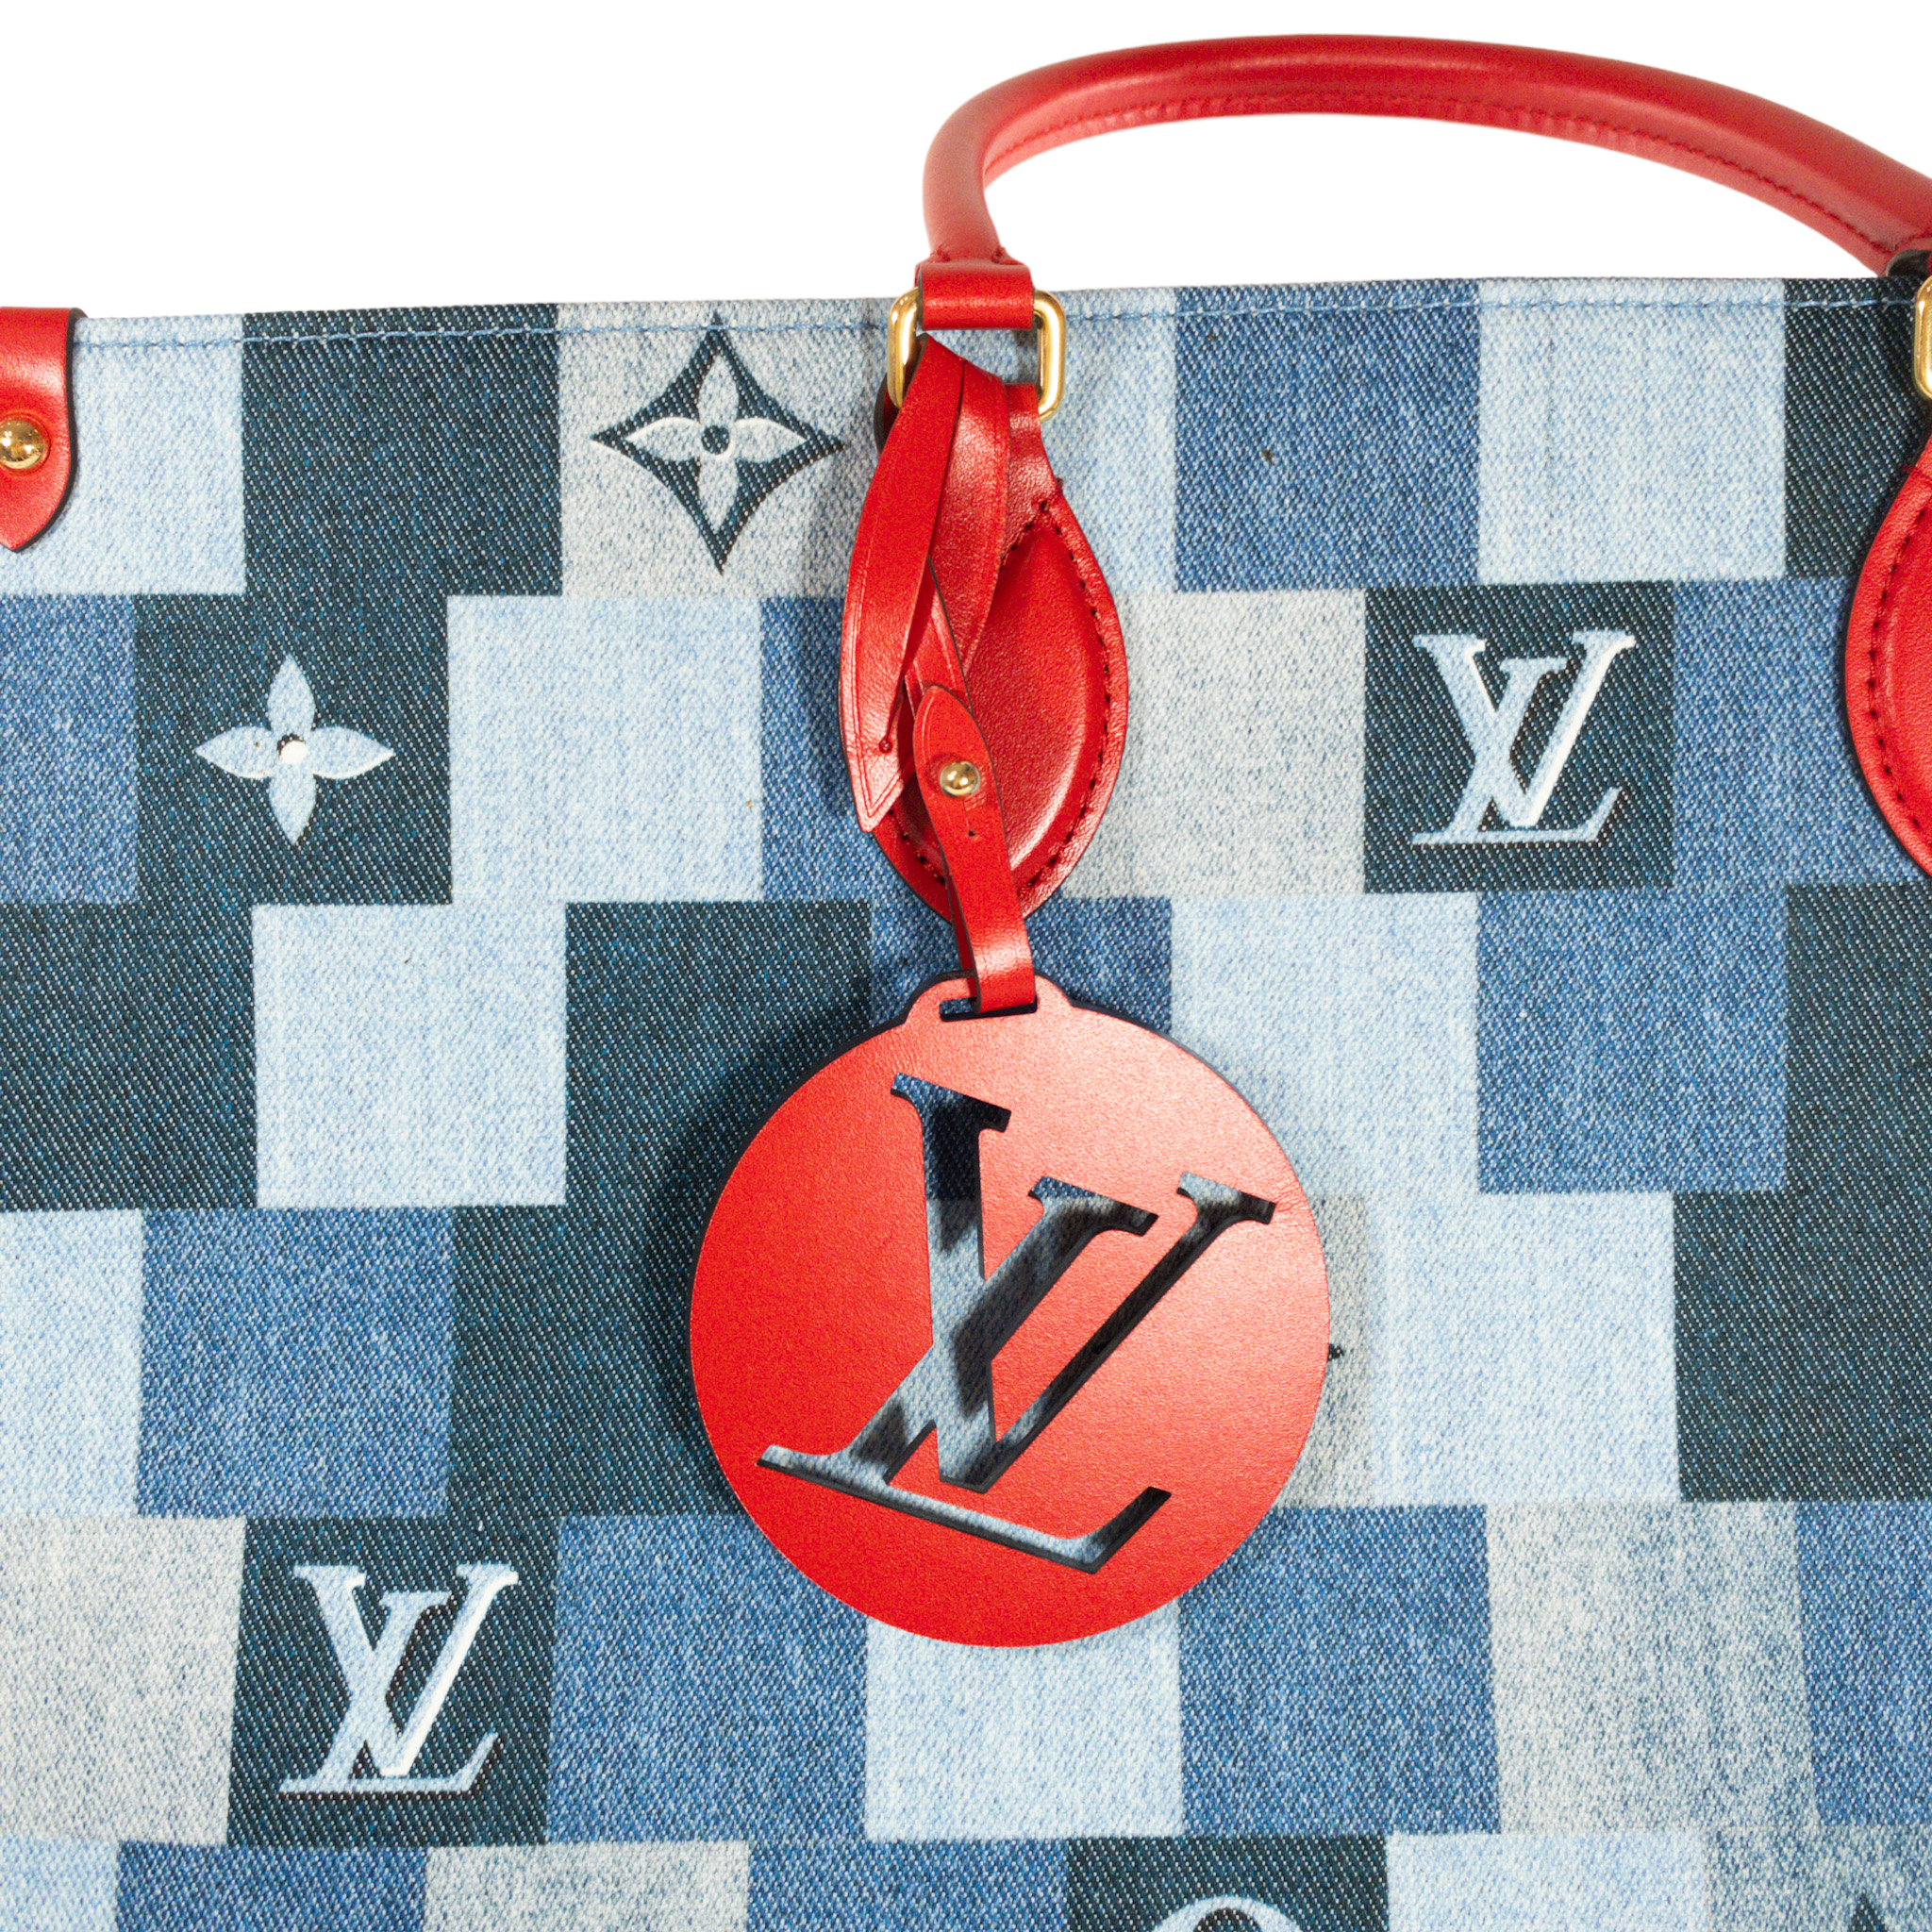 Louis Vuitton Beach Pouch Damier and Monogram Patchwork Denim at